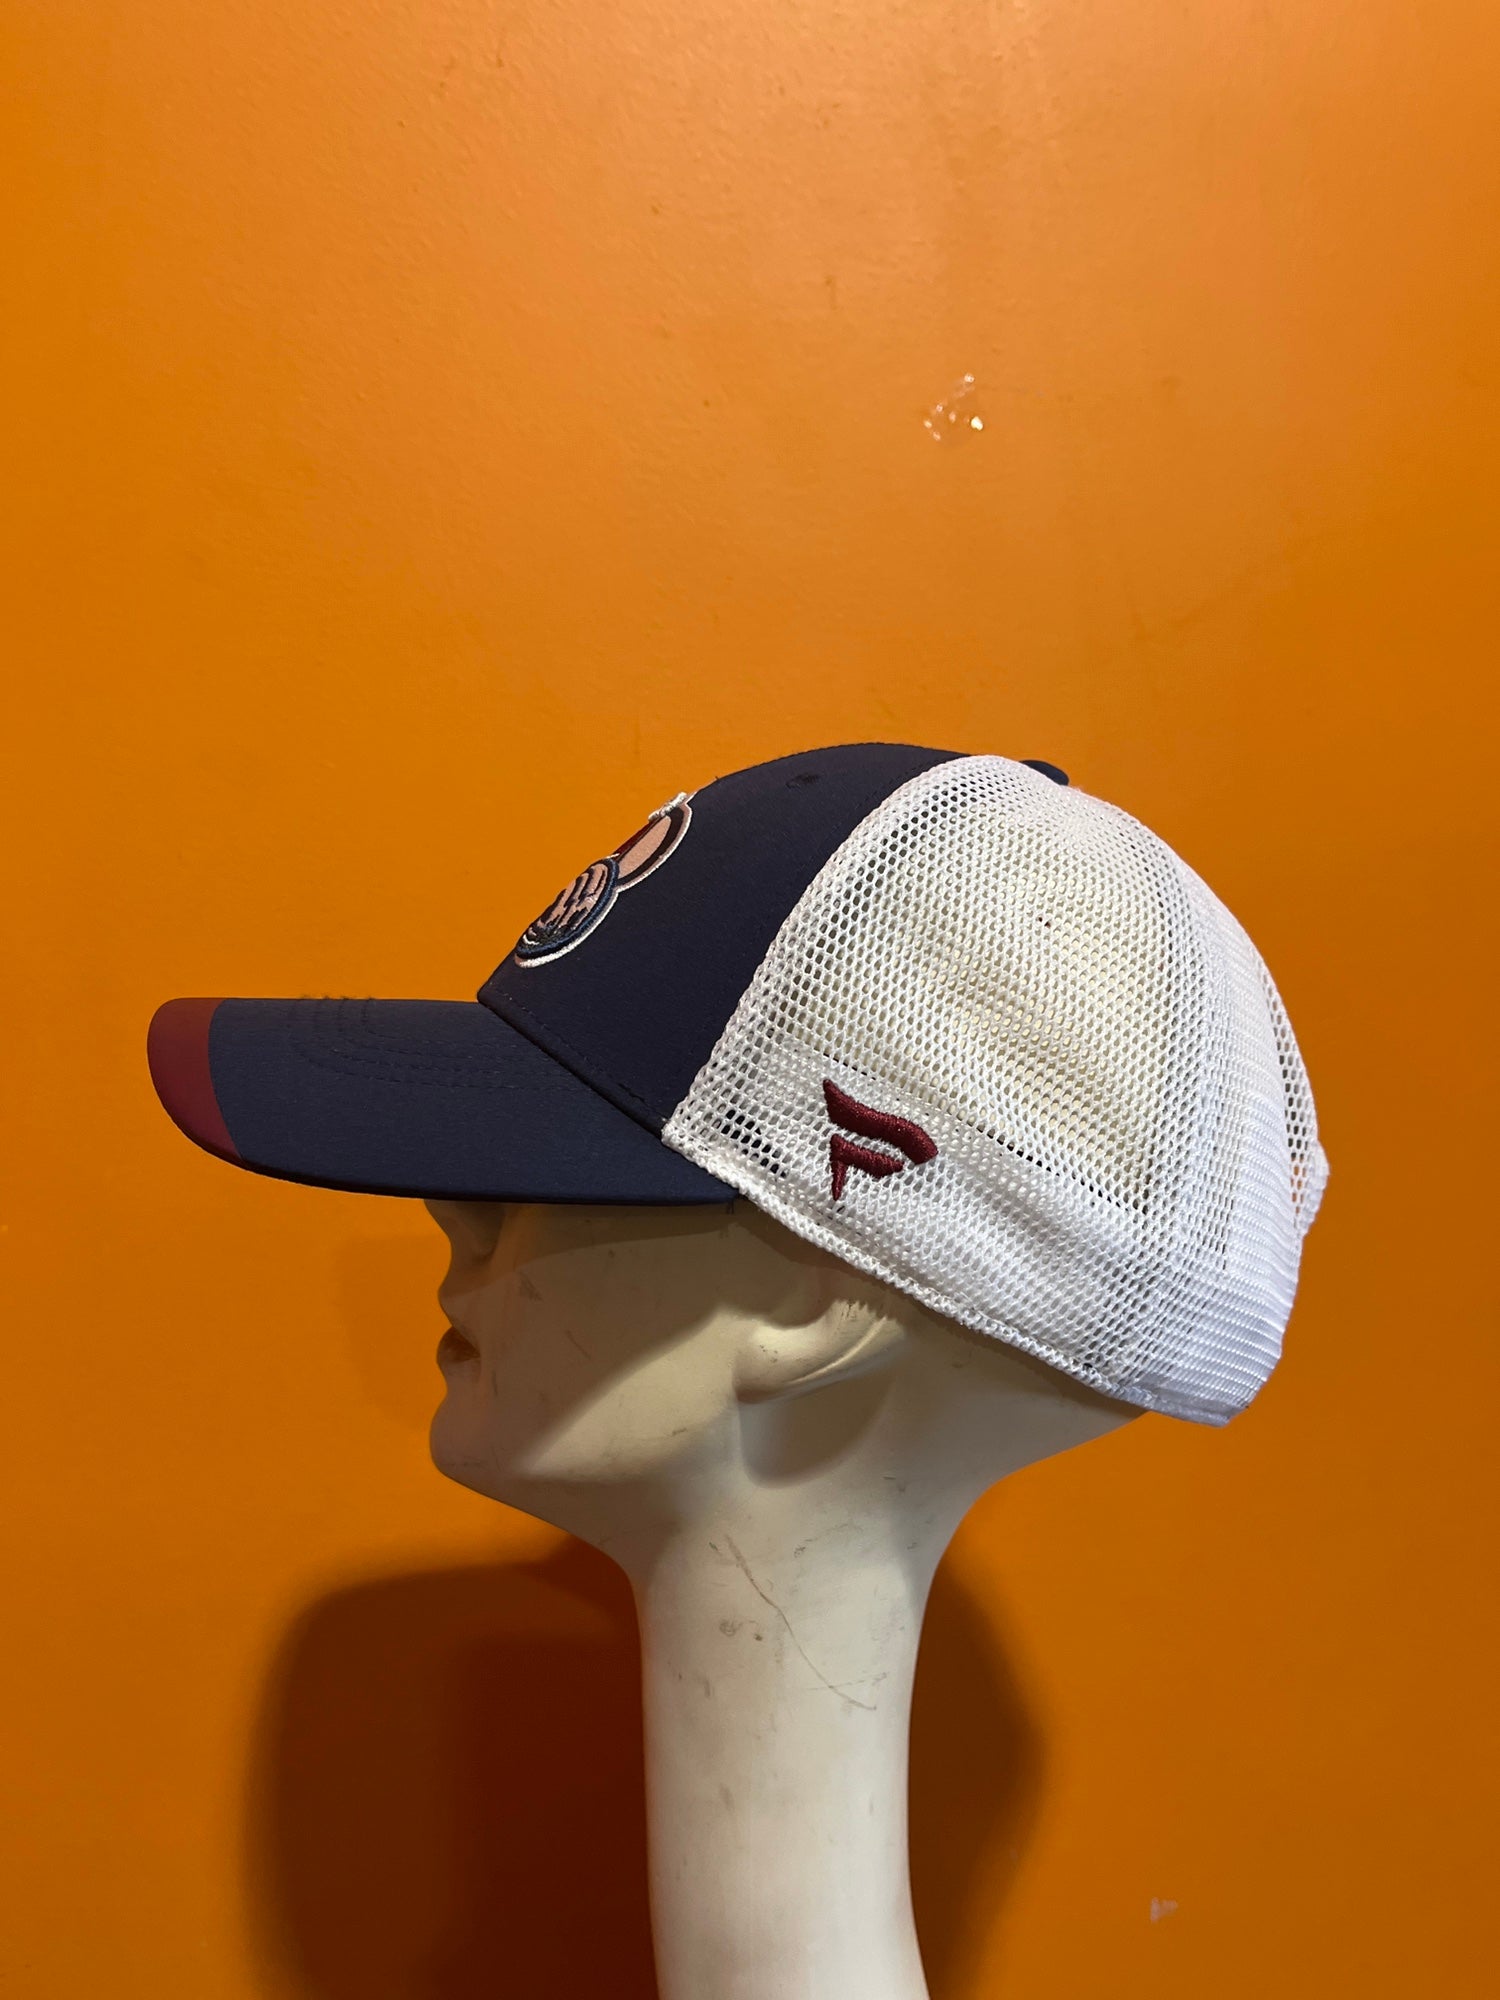 New Fanatics Navy and White Colorado Avalanche Big Logo Adjustable Hat